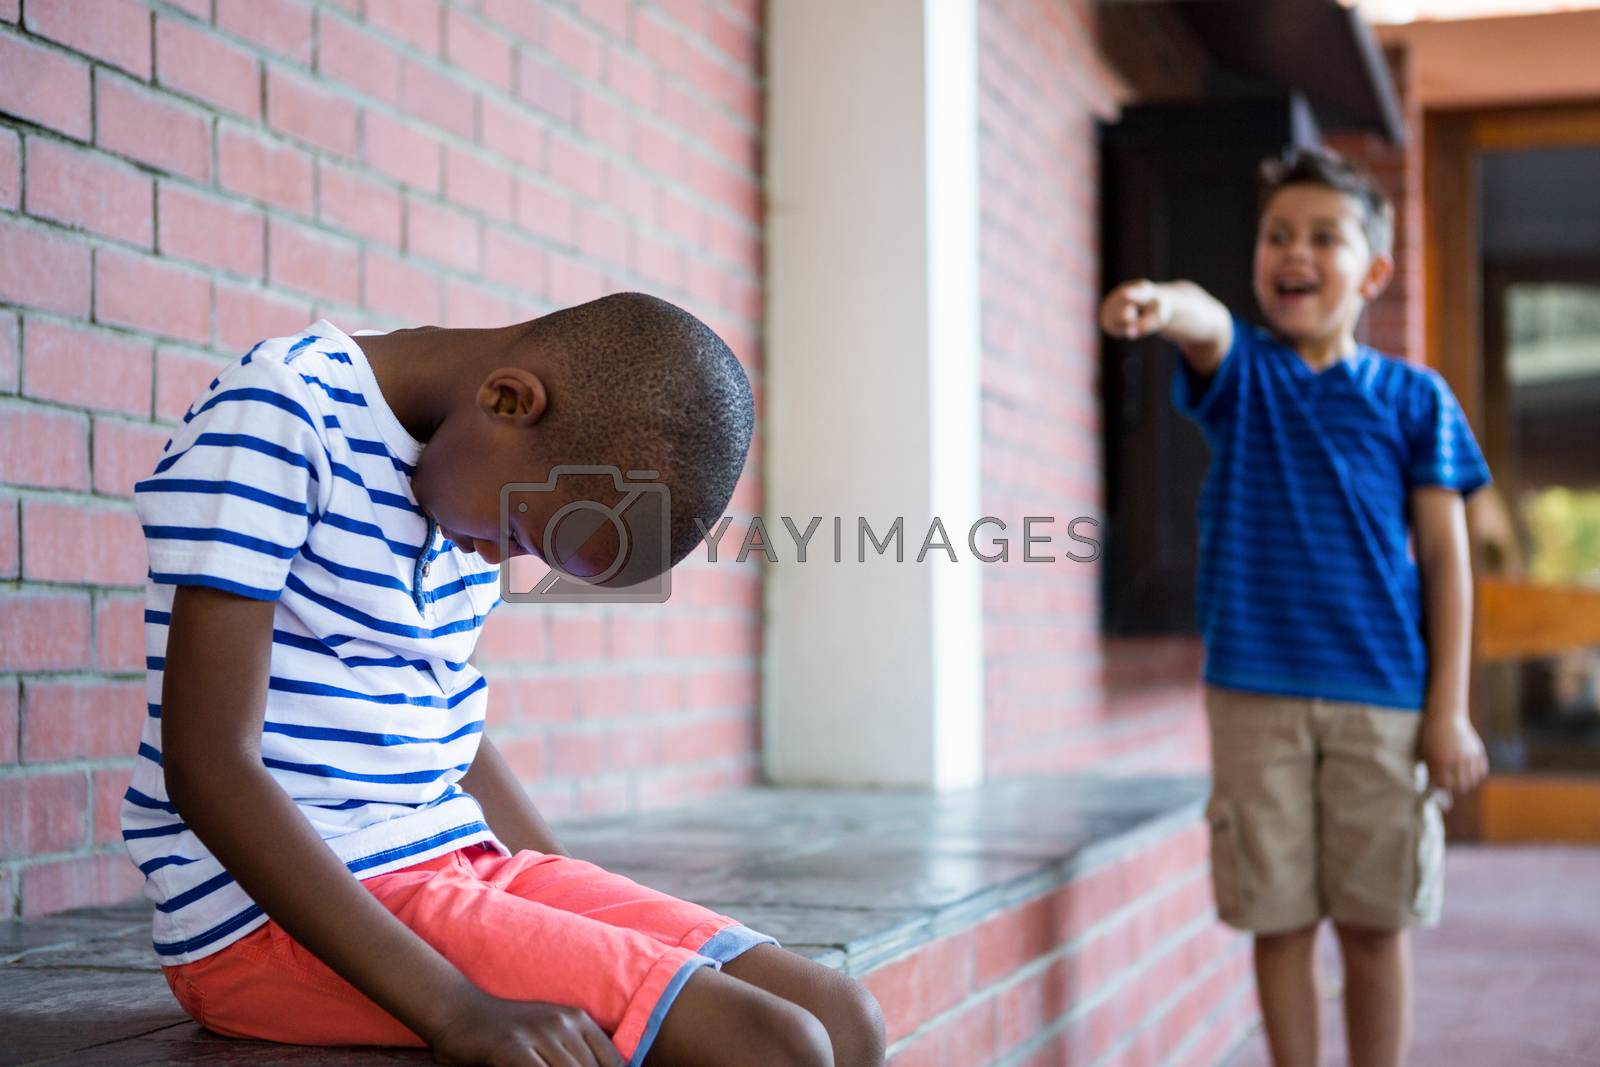 Royalty free image of Boy laughing on sad classmate in corridor by Wavebreakmedia